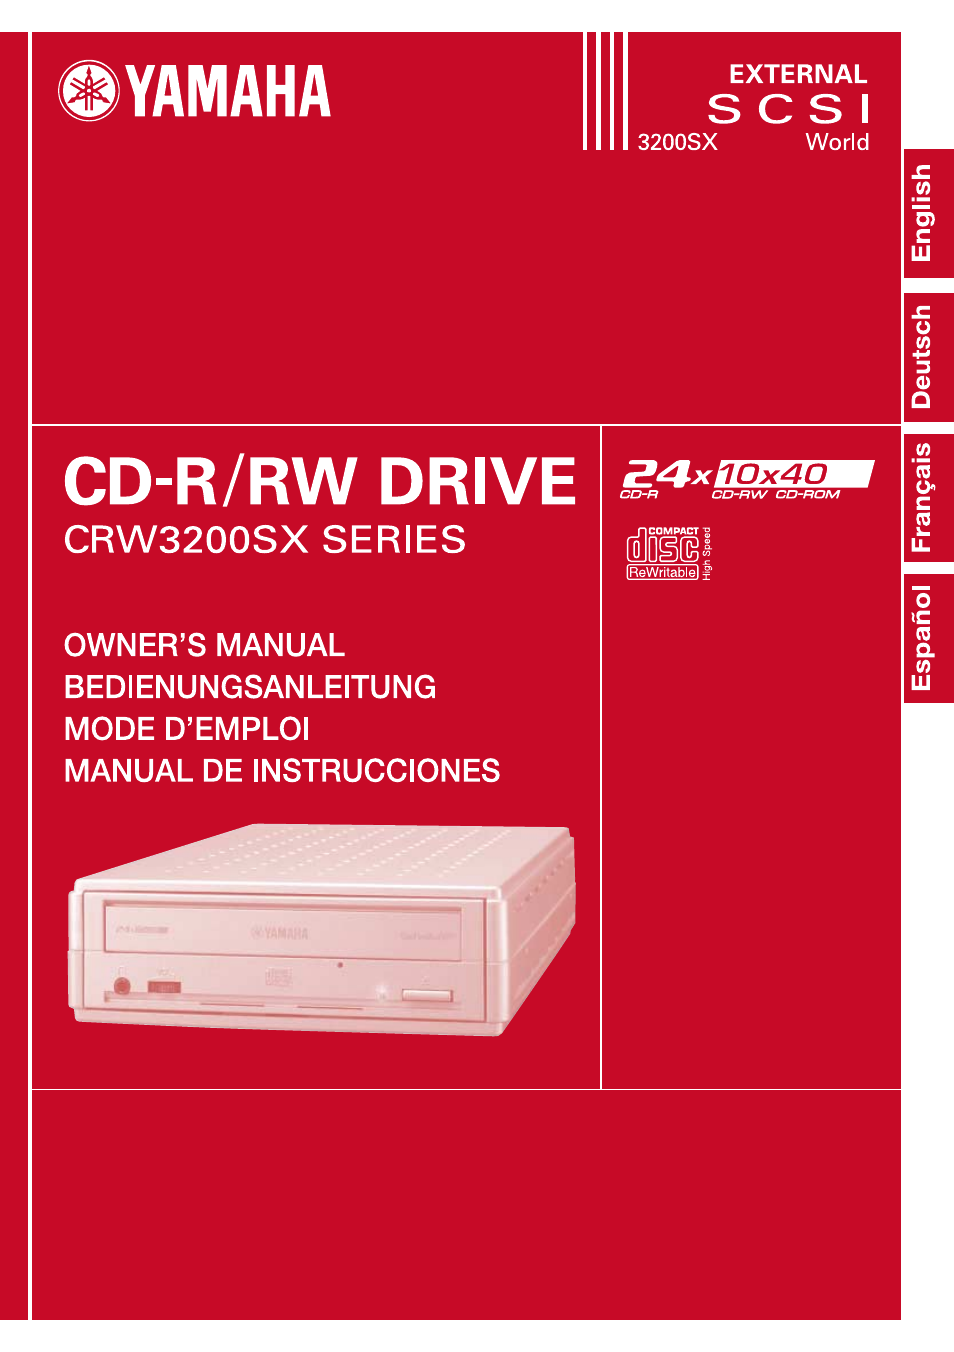 CRW3200SX